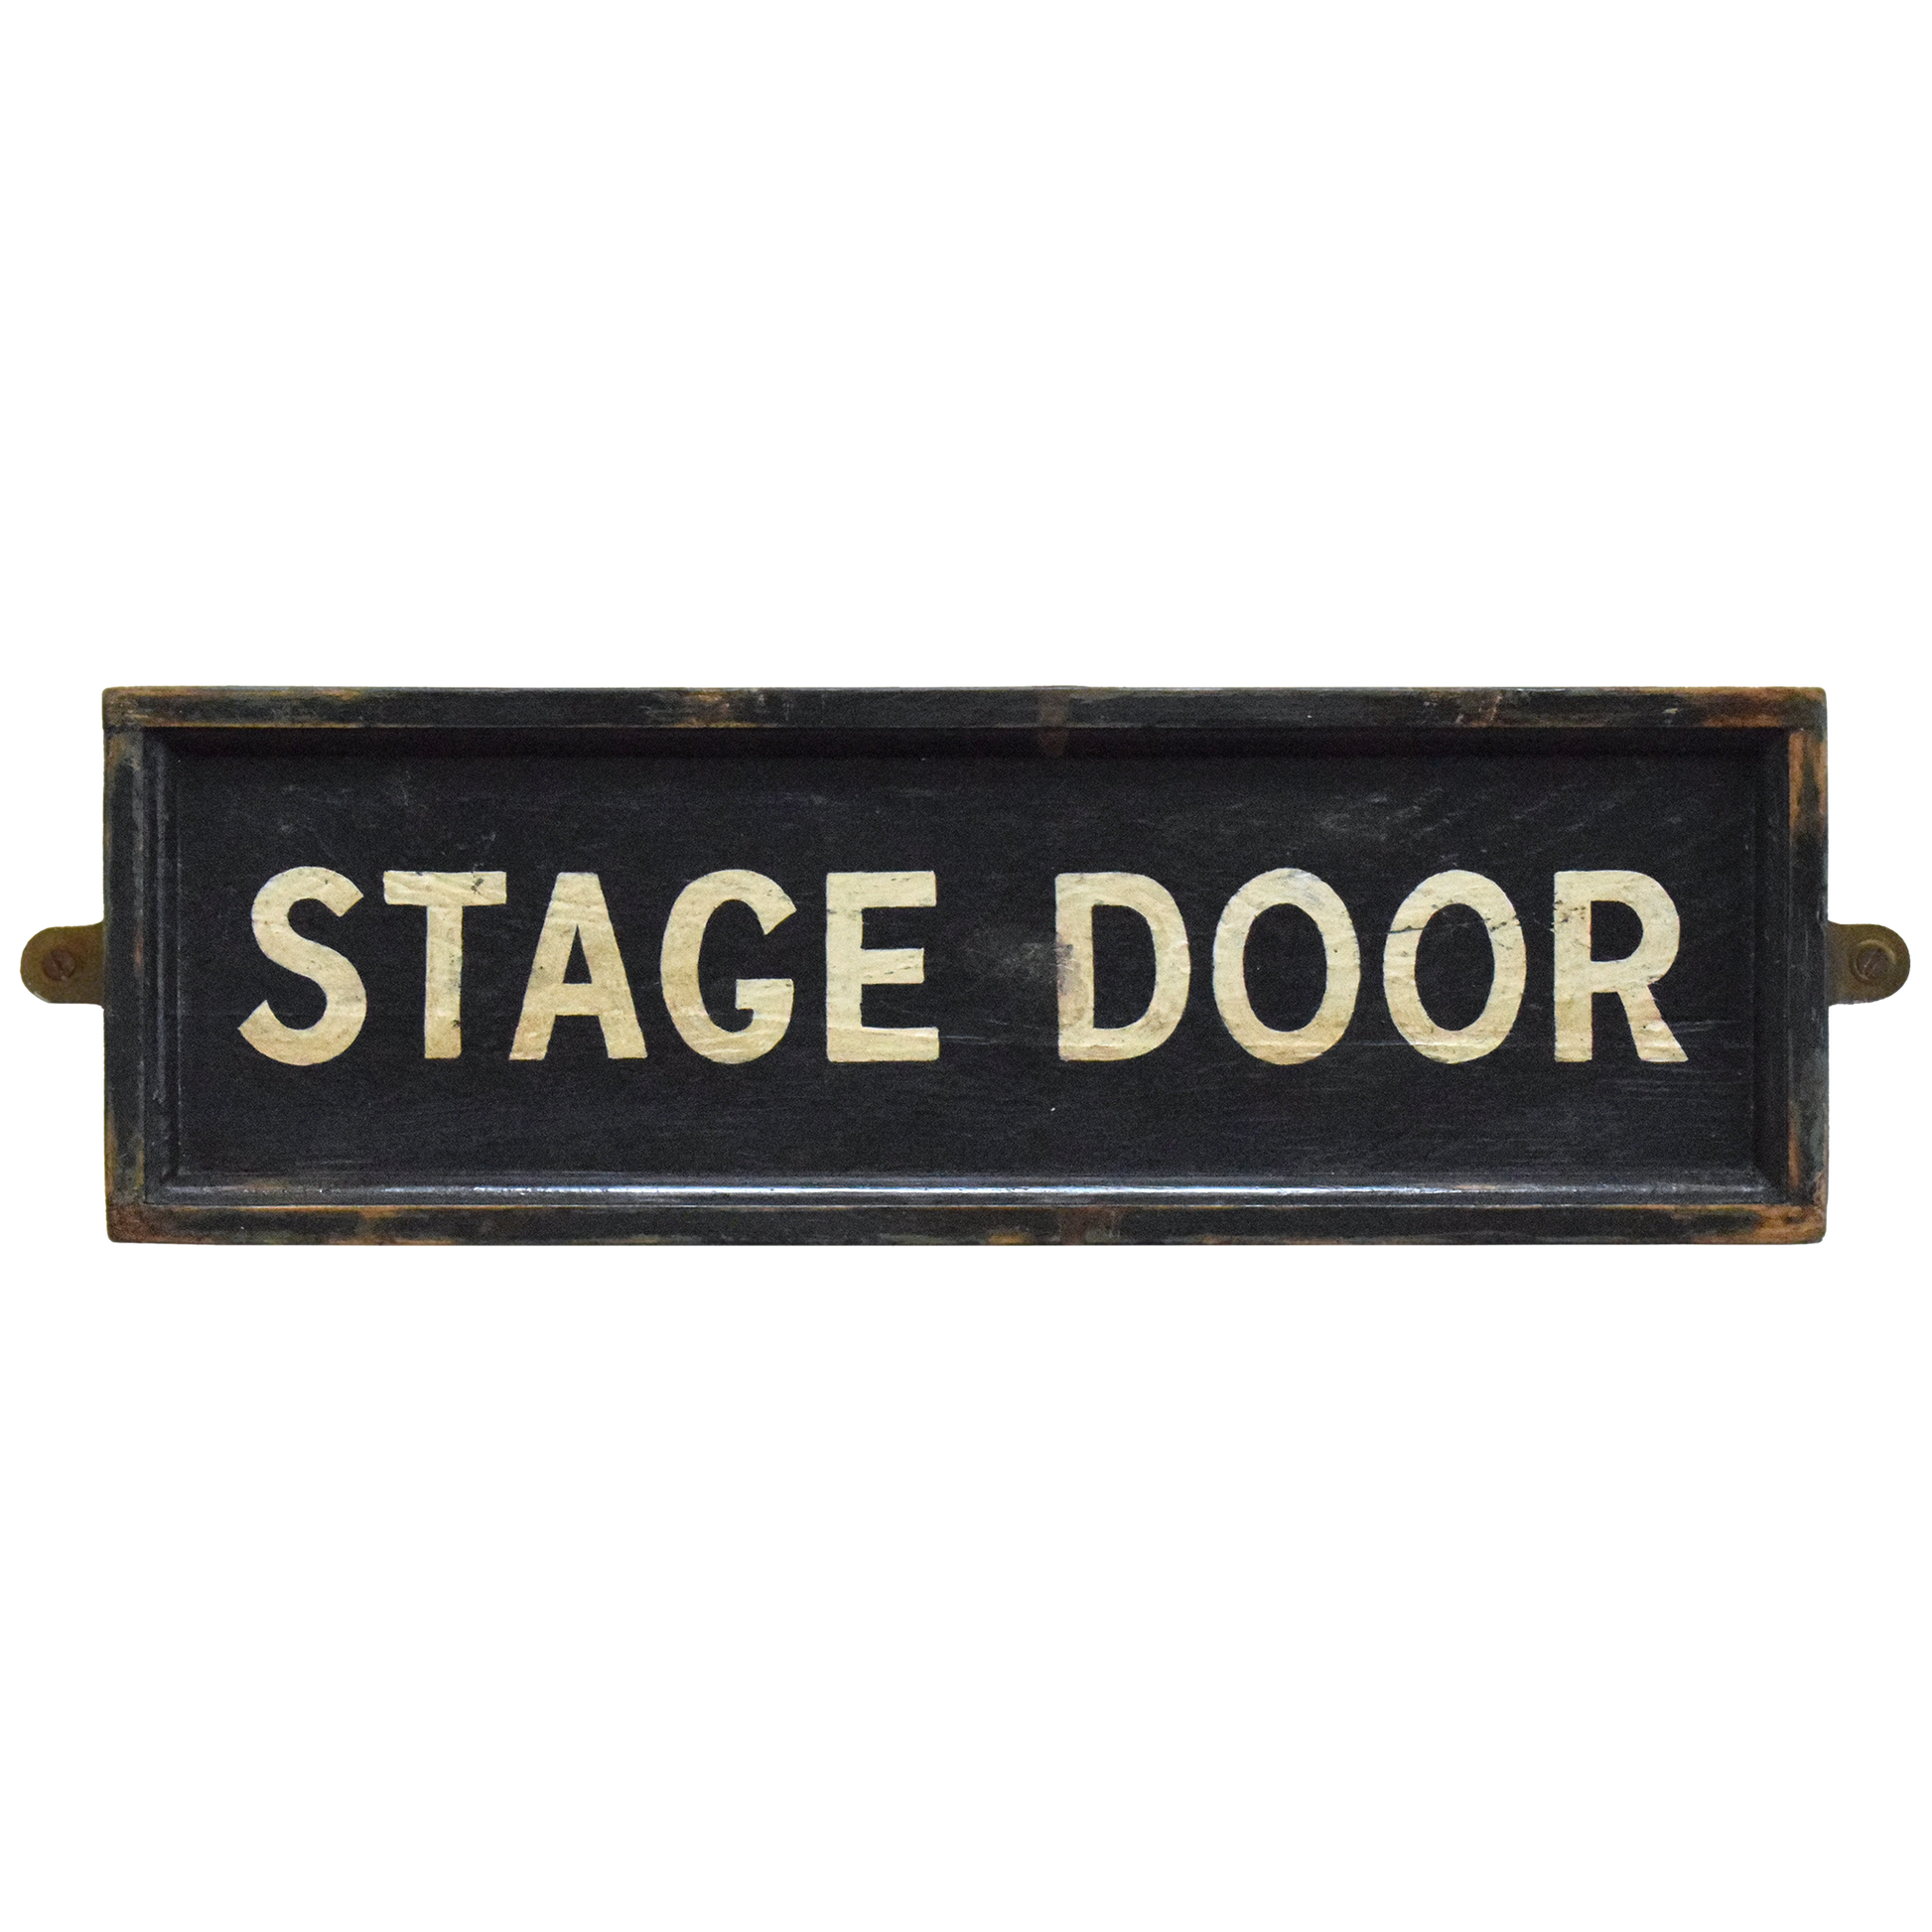 Vintage Monochrome Theatre Stage Door Sign